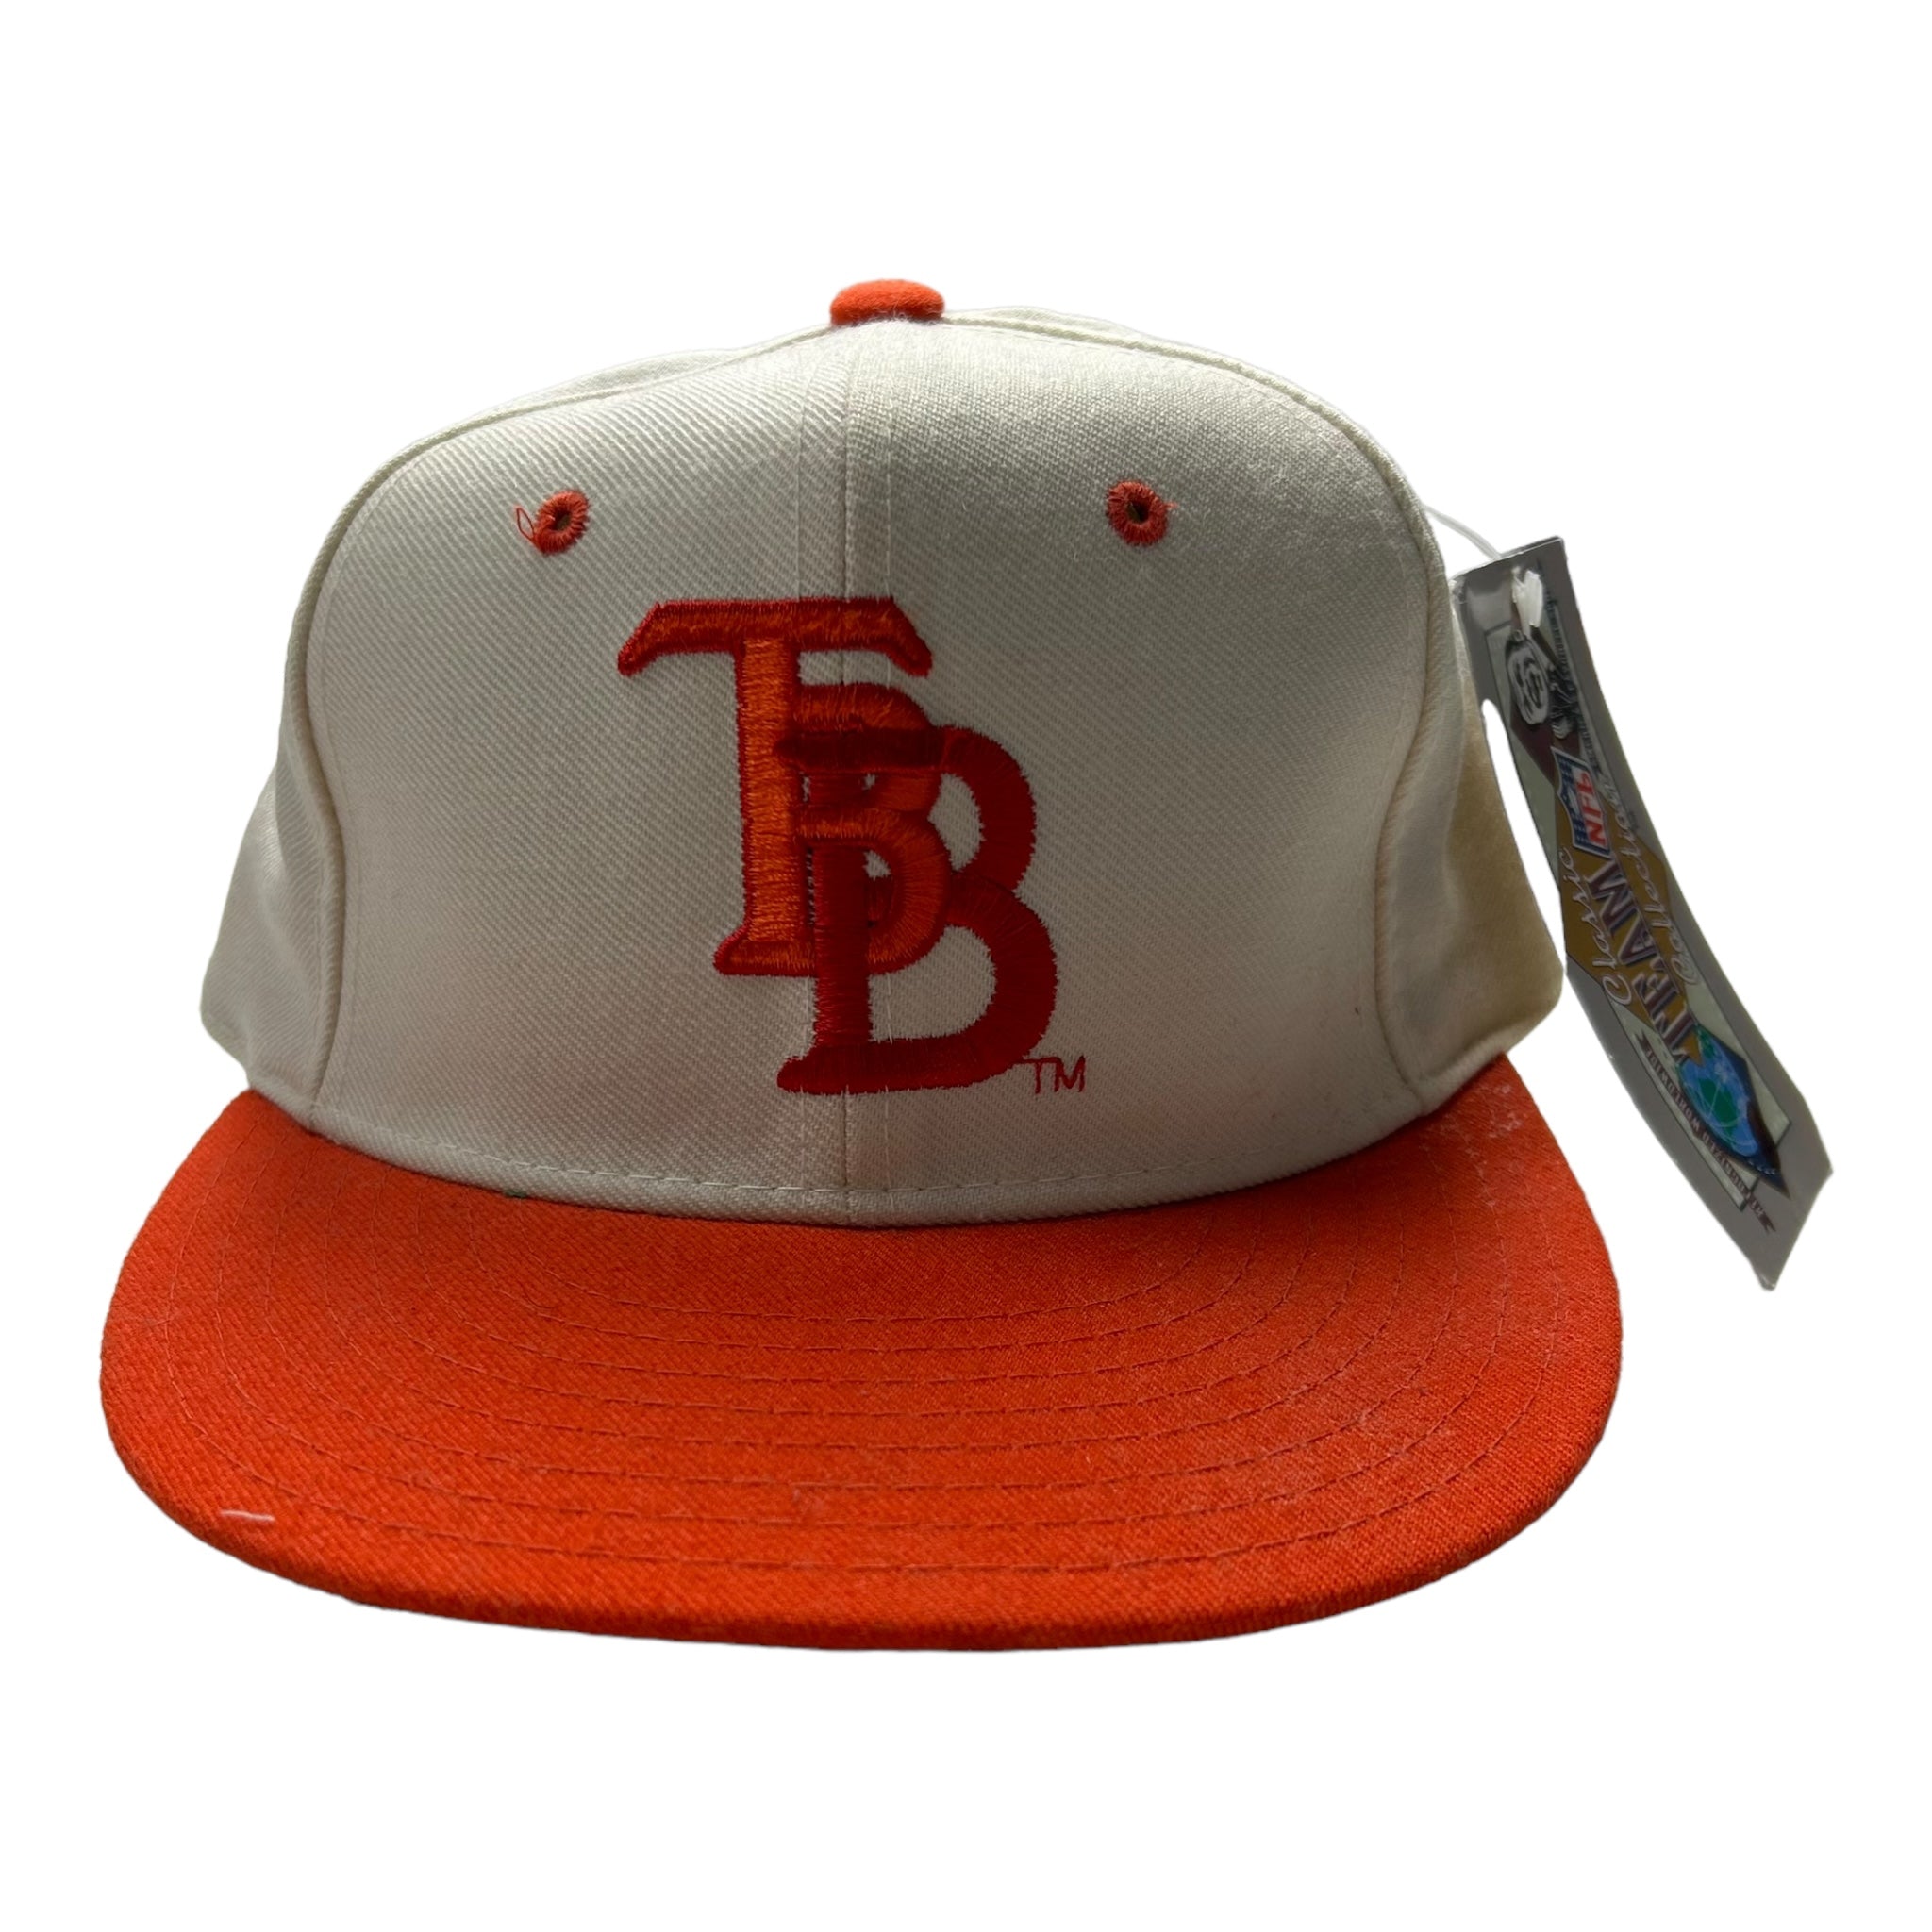 Vintage Tampa Bay Buccaneers Fitted Hat